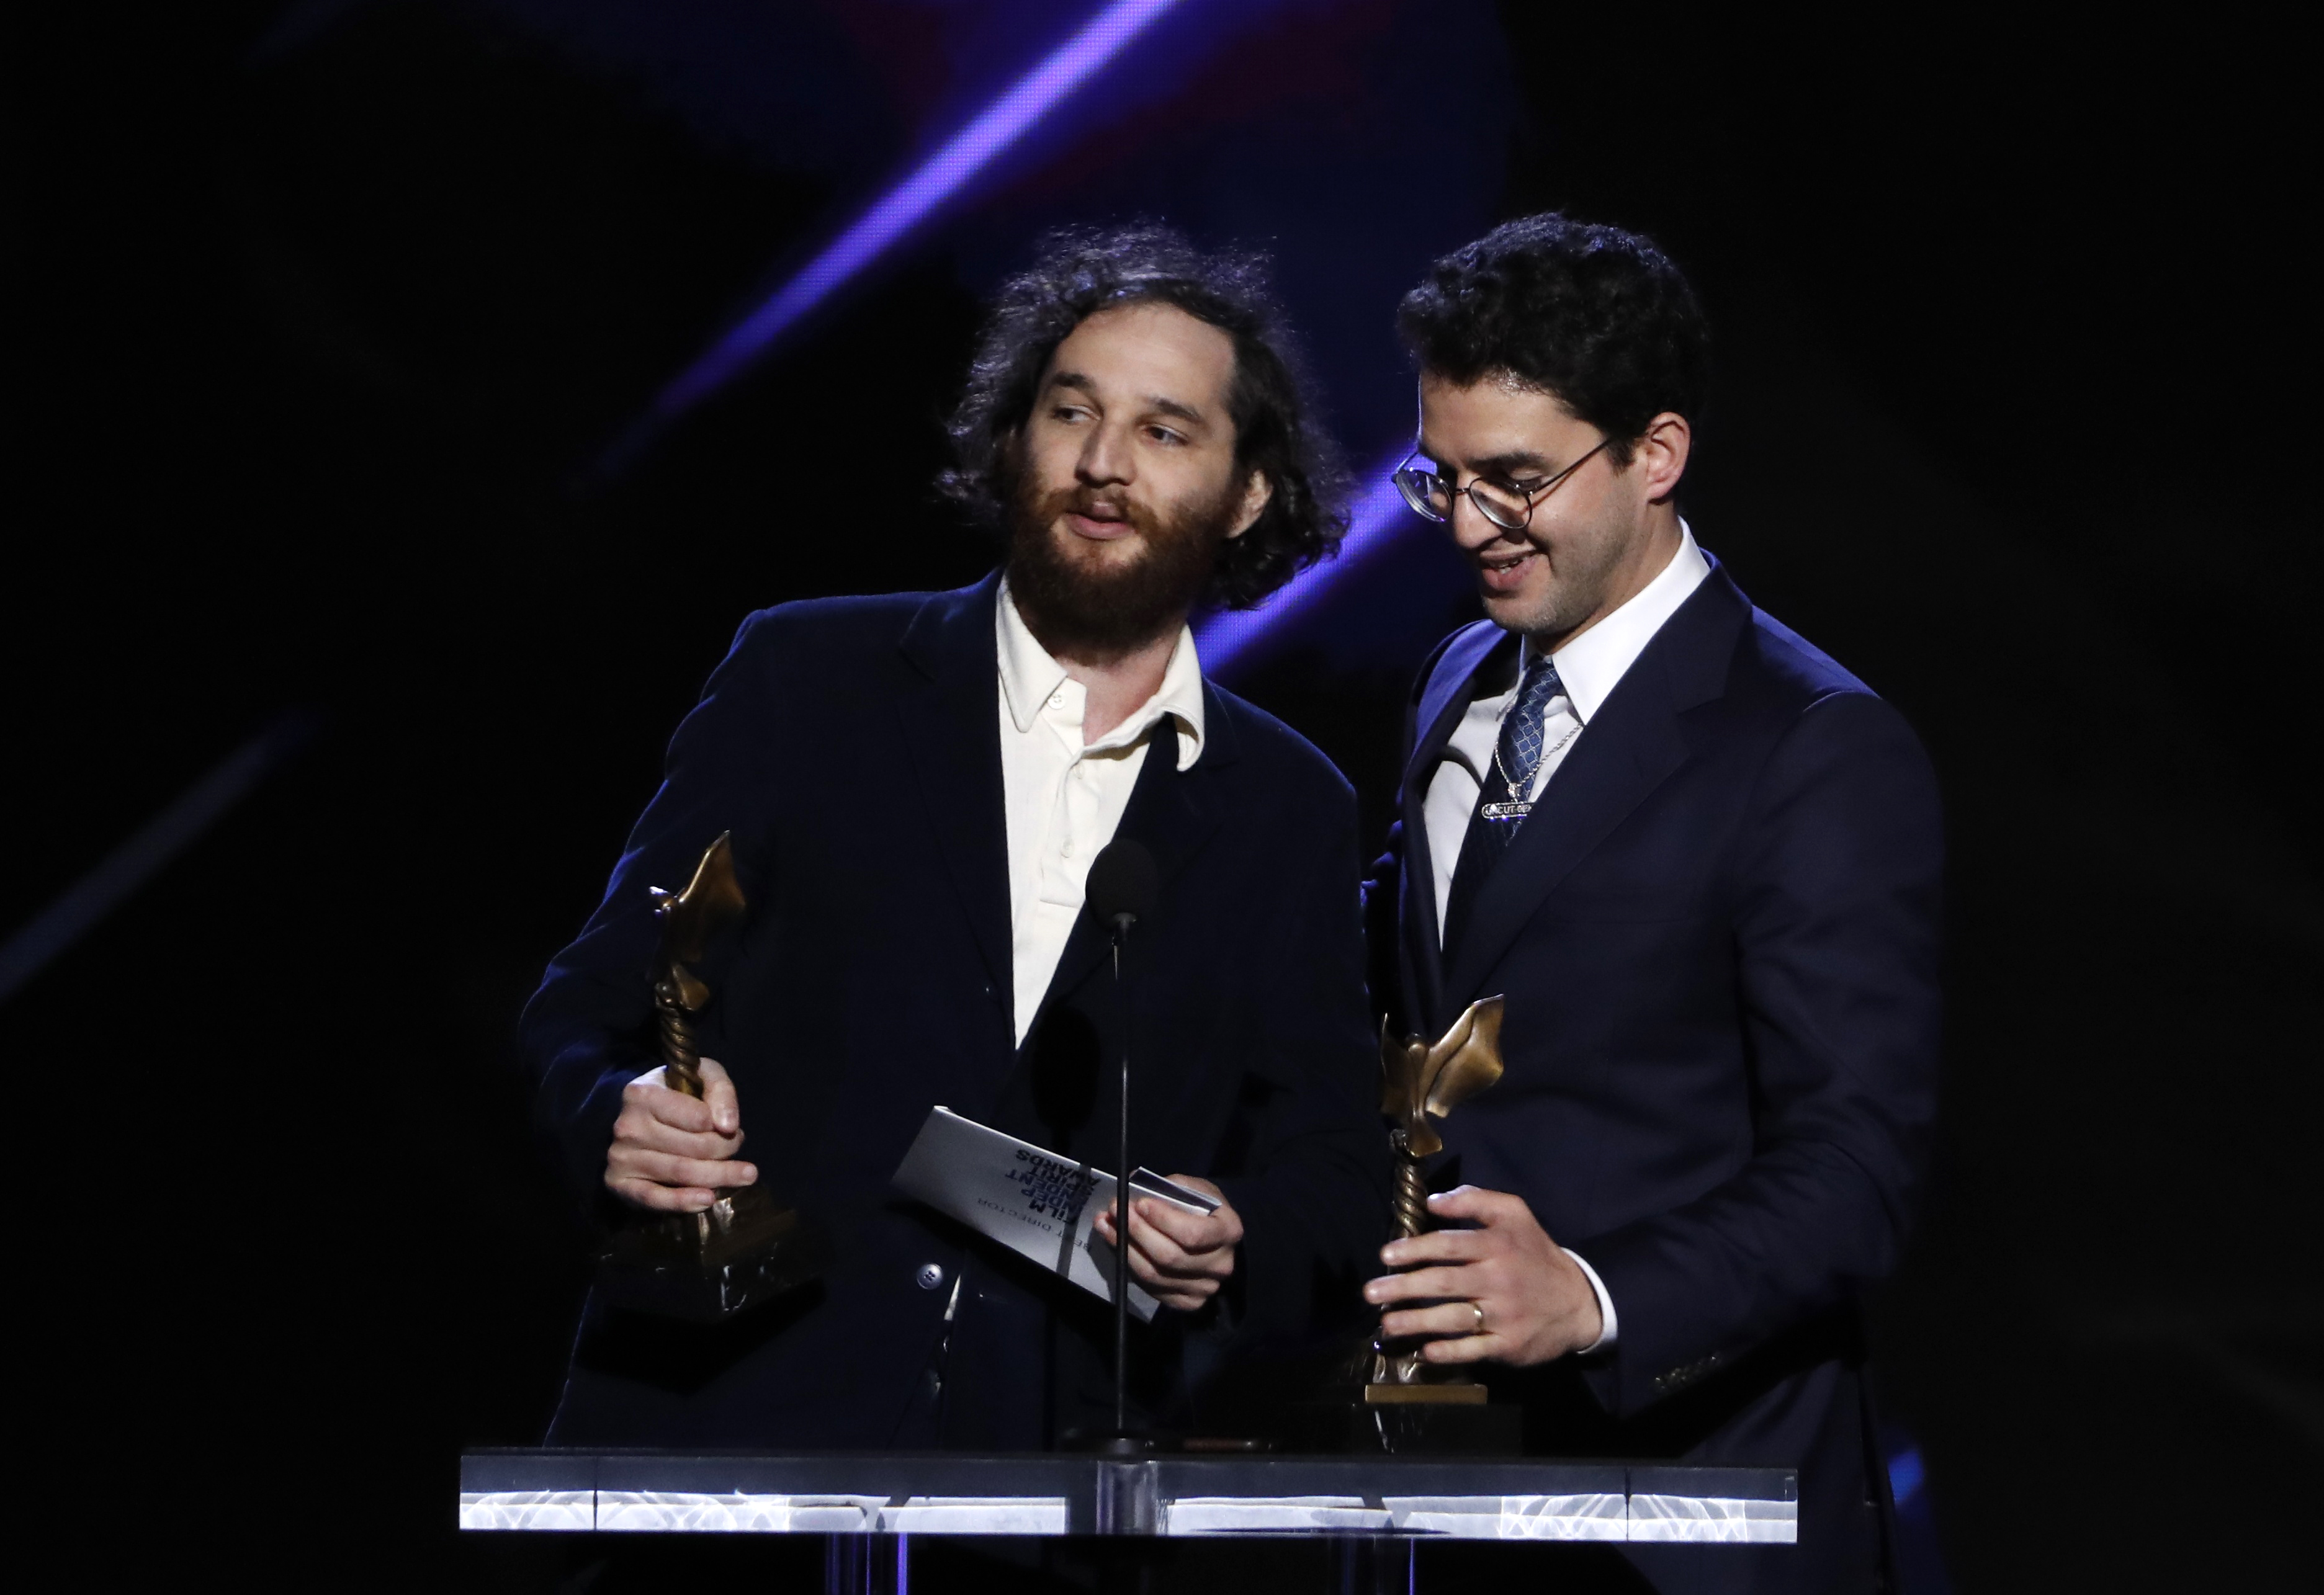 35th Film Independent Spirit Awards - Show - Santa Monica, California, U.S., February 8, 2020 - Josh Safdie and Ben Safdie accept the best director award for "Uncut Gems." REUTERS/Eric Gaillard